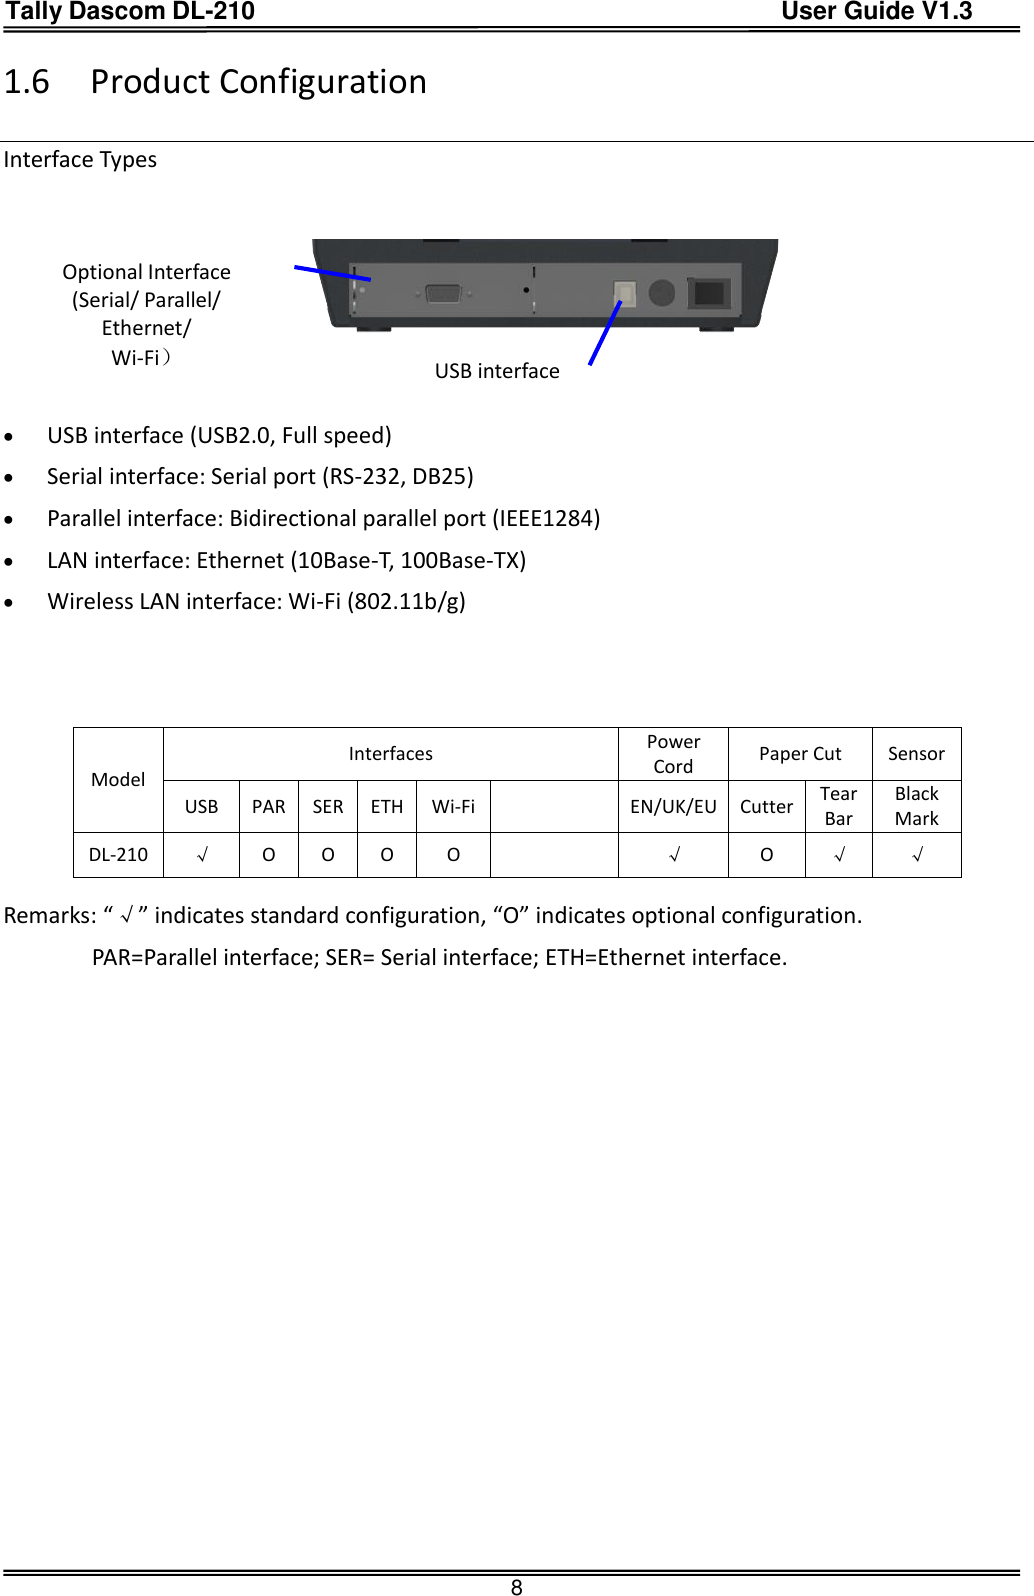 Tally Dascom DL-210                                          User Guide V1.3  8 1.6 Product Configuration  Interface Types       USB interface (USB2.0, Full speed)  Serial interface: Serial port (RS-232, DB25)  Parallel interface: Bidirectional parallel port (IEEE1284)  LAN interface: Ethernet (10Base-T, 100Base-TX)  Wireless LAN interface: Wi-Fi (802.11b/g)     Model Interfaces Power Cord Paper Cut Sensor USB PAR SER ETH Wi-Fi  EN/UK/EU Cutter Tear Bar Black Mark DL-210 √ O O O O  √ O √ √ Remarks: “√” indicates standard configuration, “O” indicates optional configuration. PAR=Parallel interface; SER= Serial interface; ETH=Ethernet interface. Optional Interface (Serial/ Parallel/ Ethernet/ Wi-Fi） USB interface 